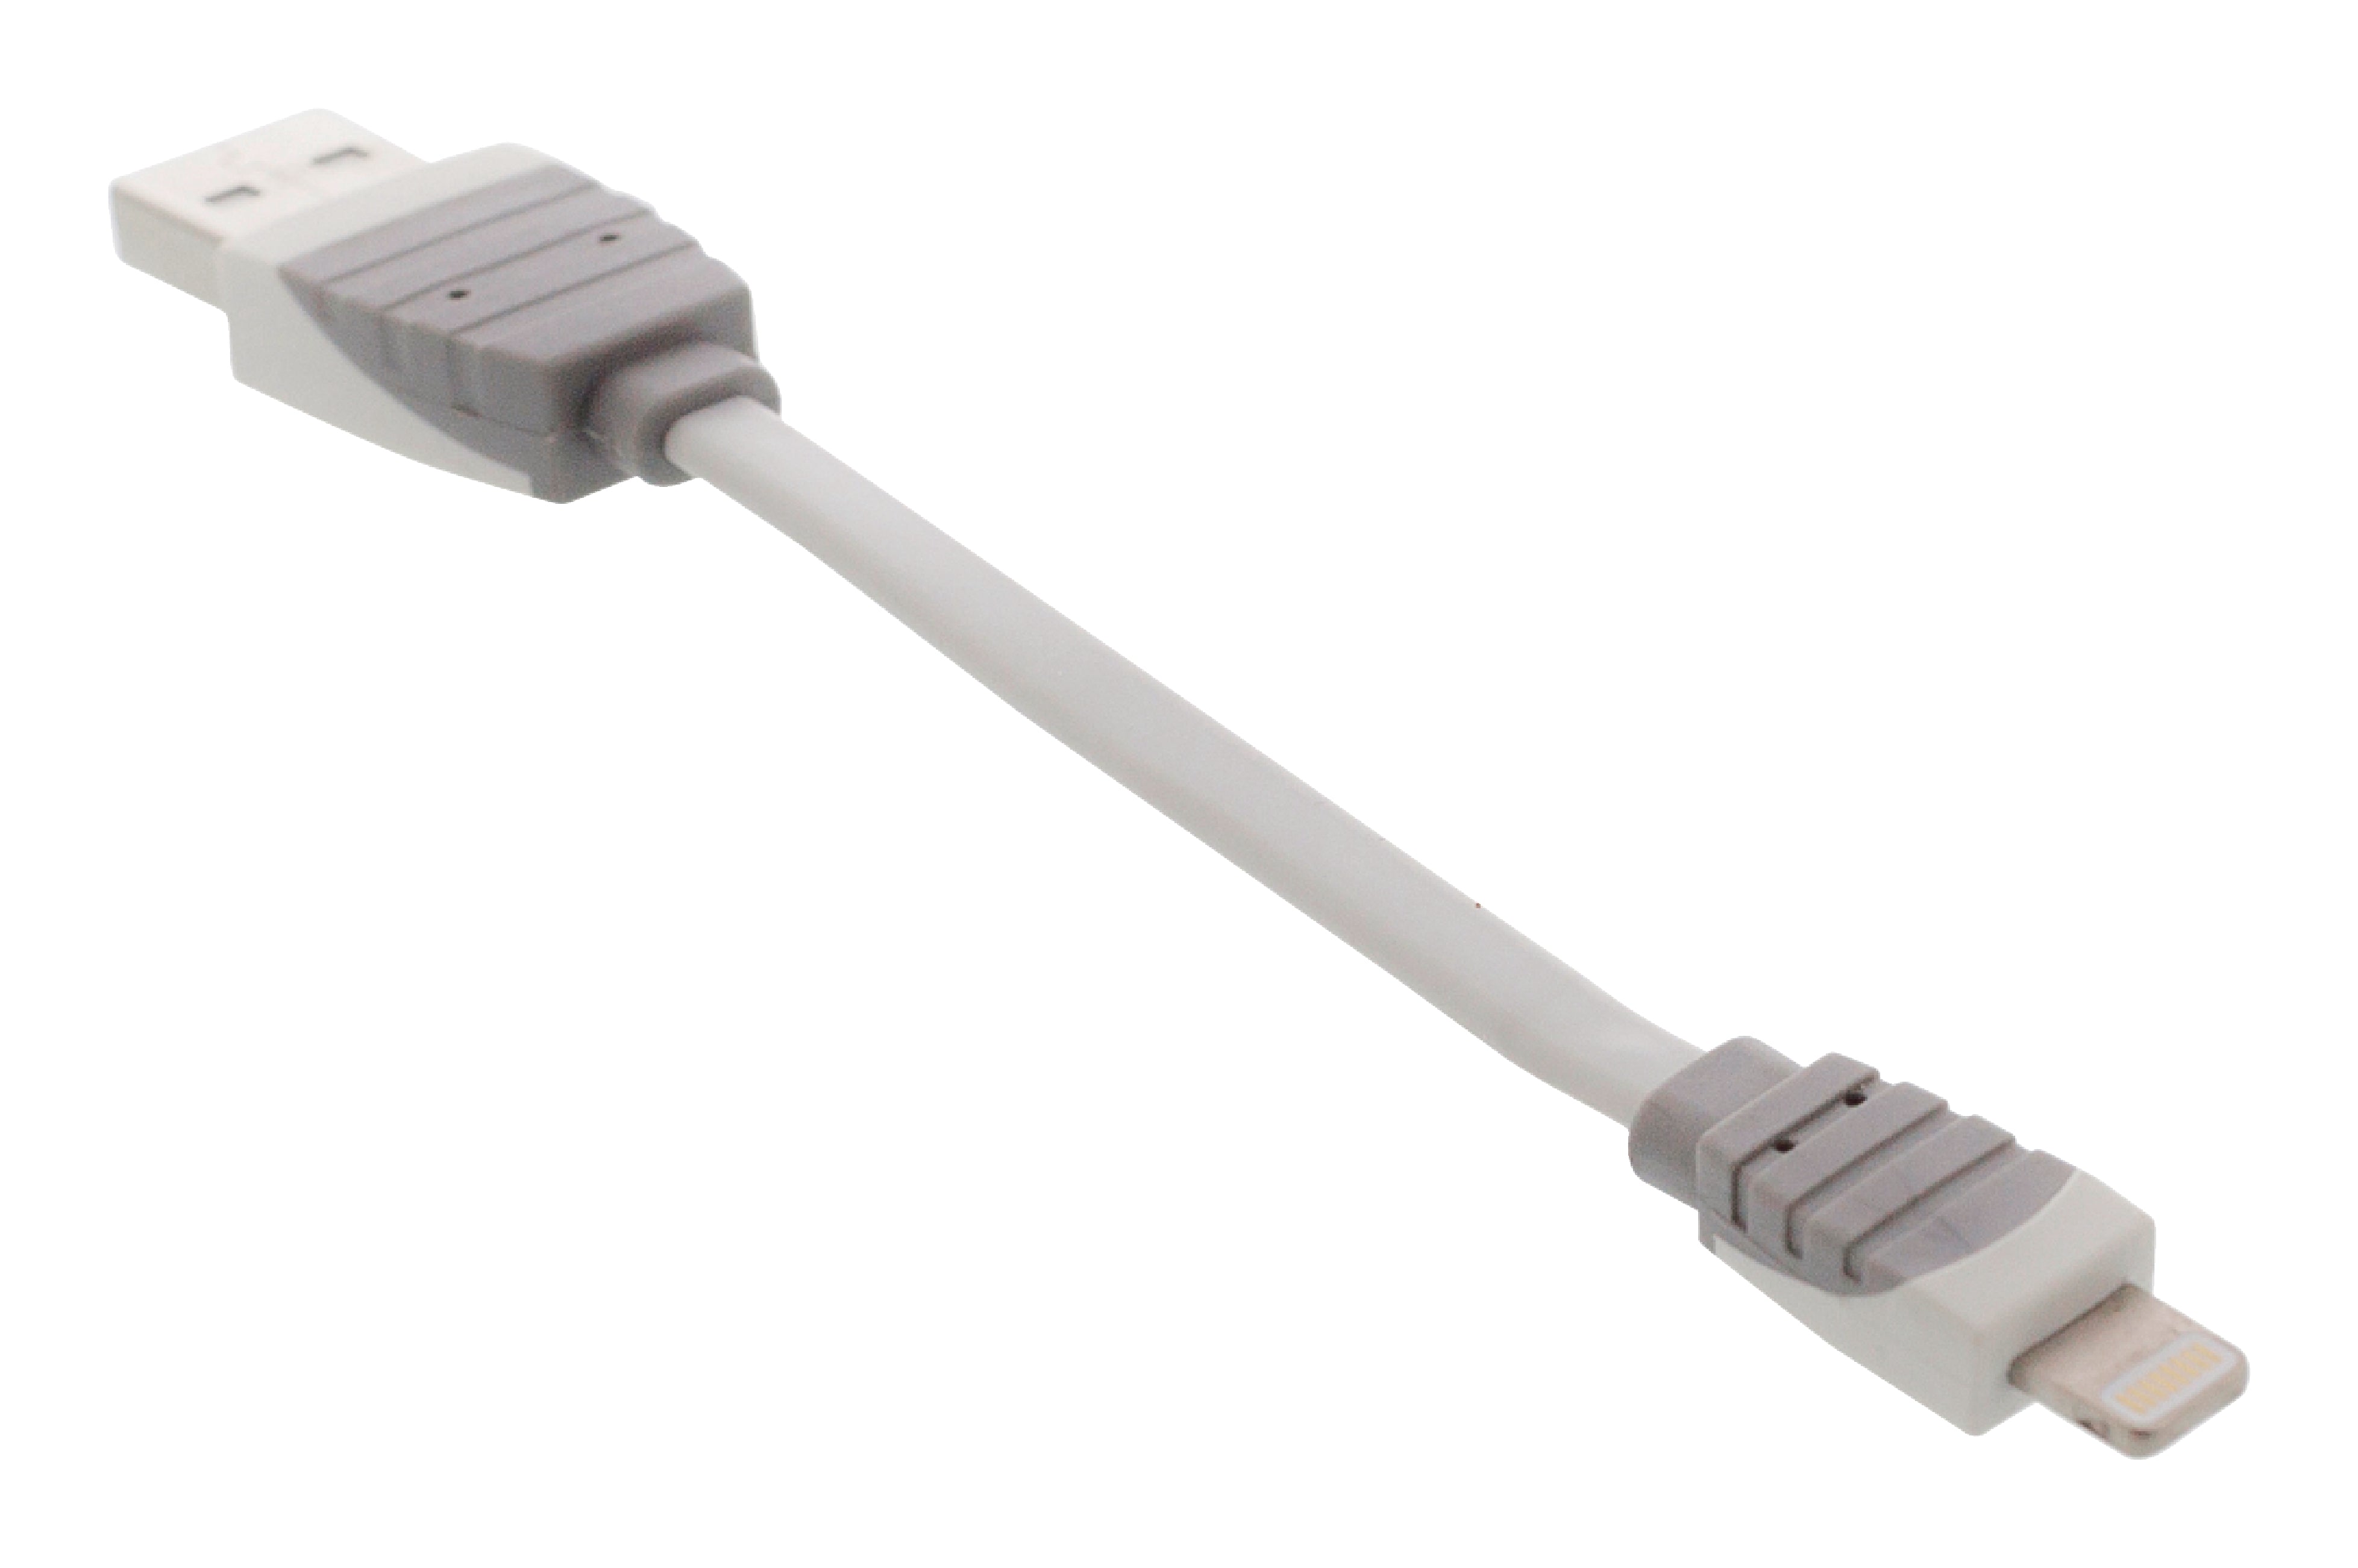 Sync und Ladekabel Apple Lightning - USB A male 0.10 m Weiss